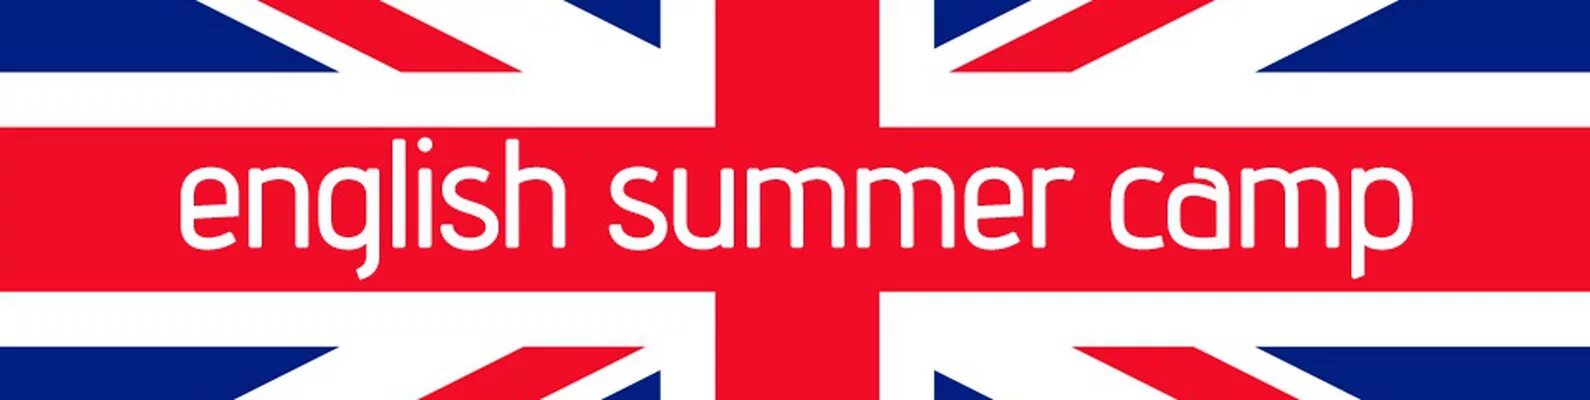 English Summer Camp. Английский летом. Логотип школы английского языка. Эмблема лето для английского языка. Инглиш кэмп